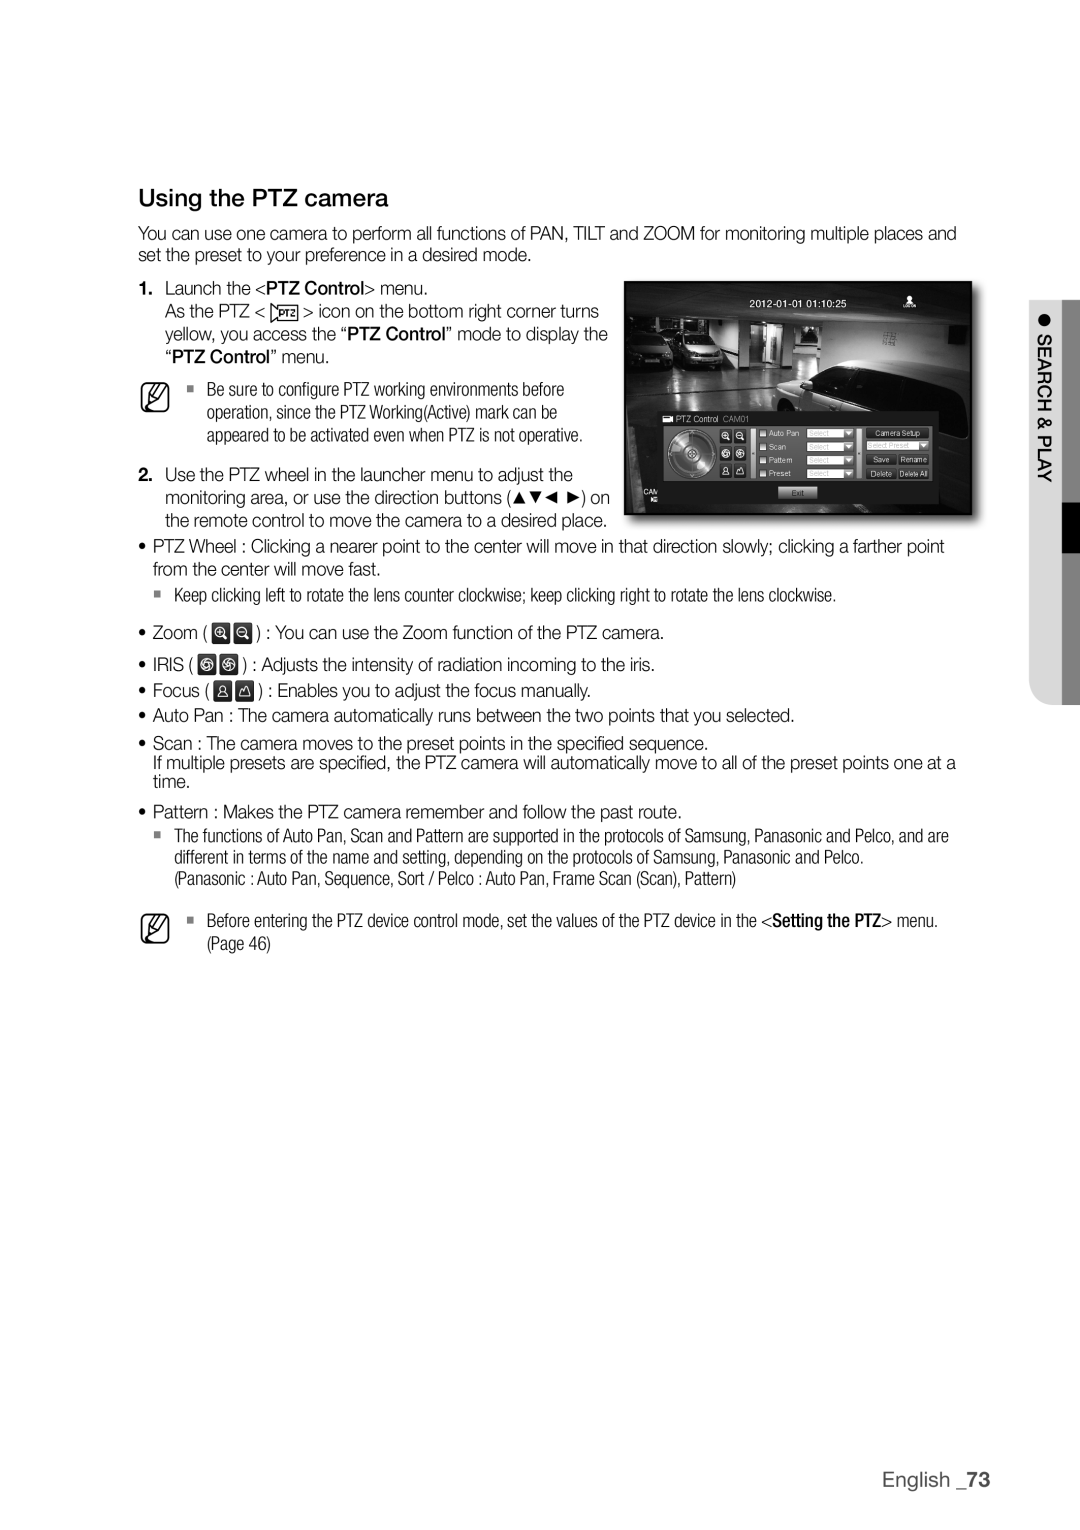 Samsung SDR3100 user manual using the PTZ camera, English _73 